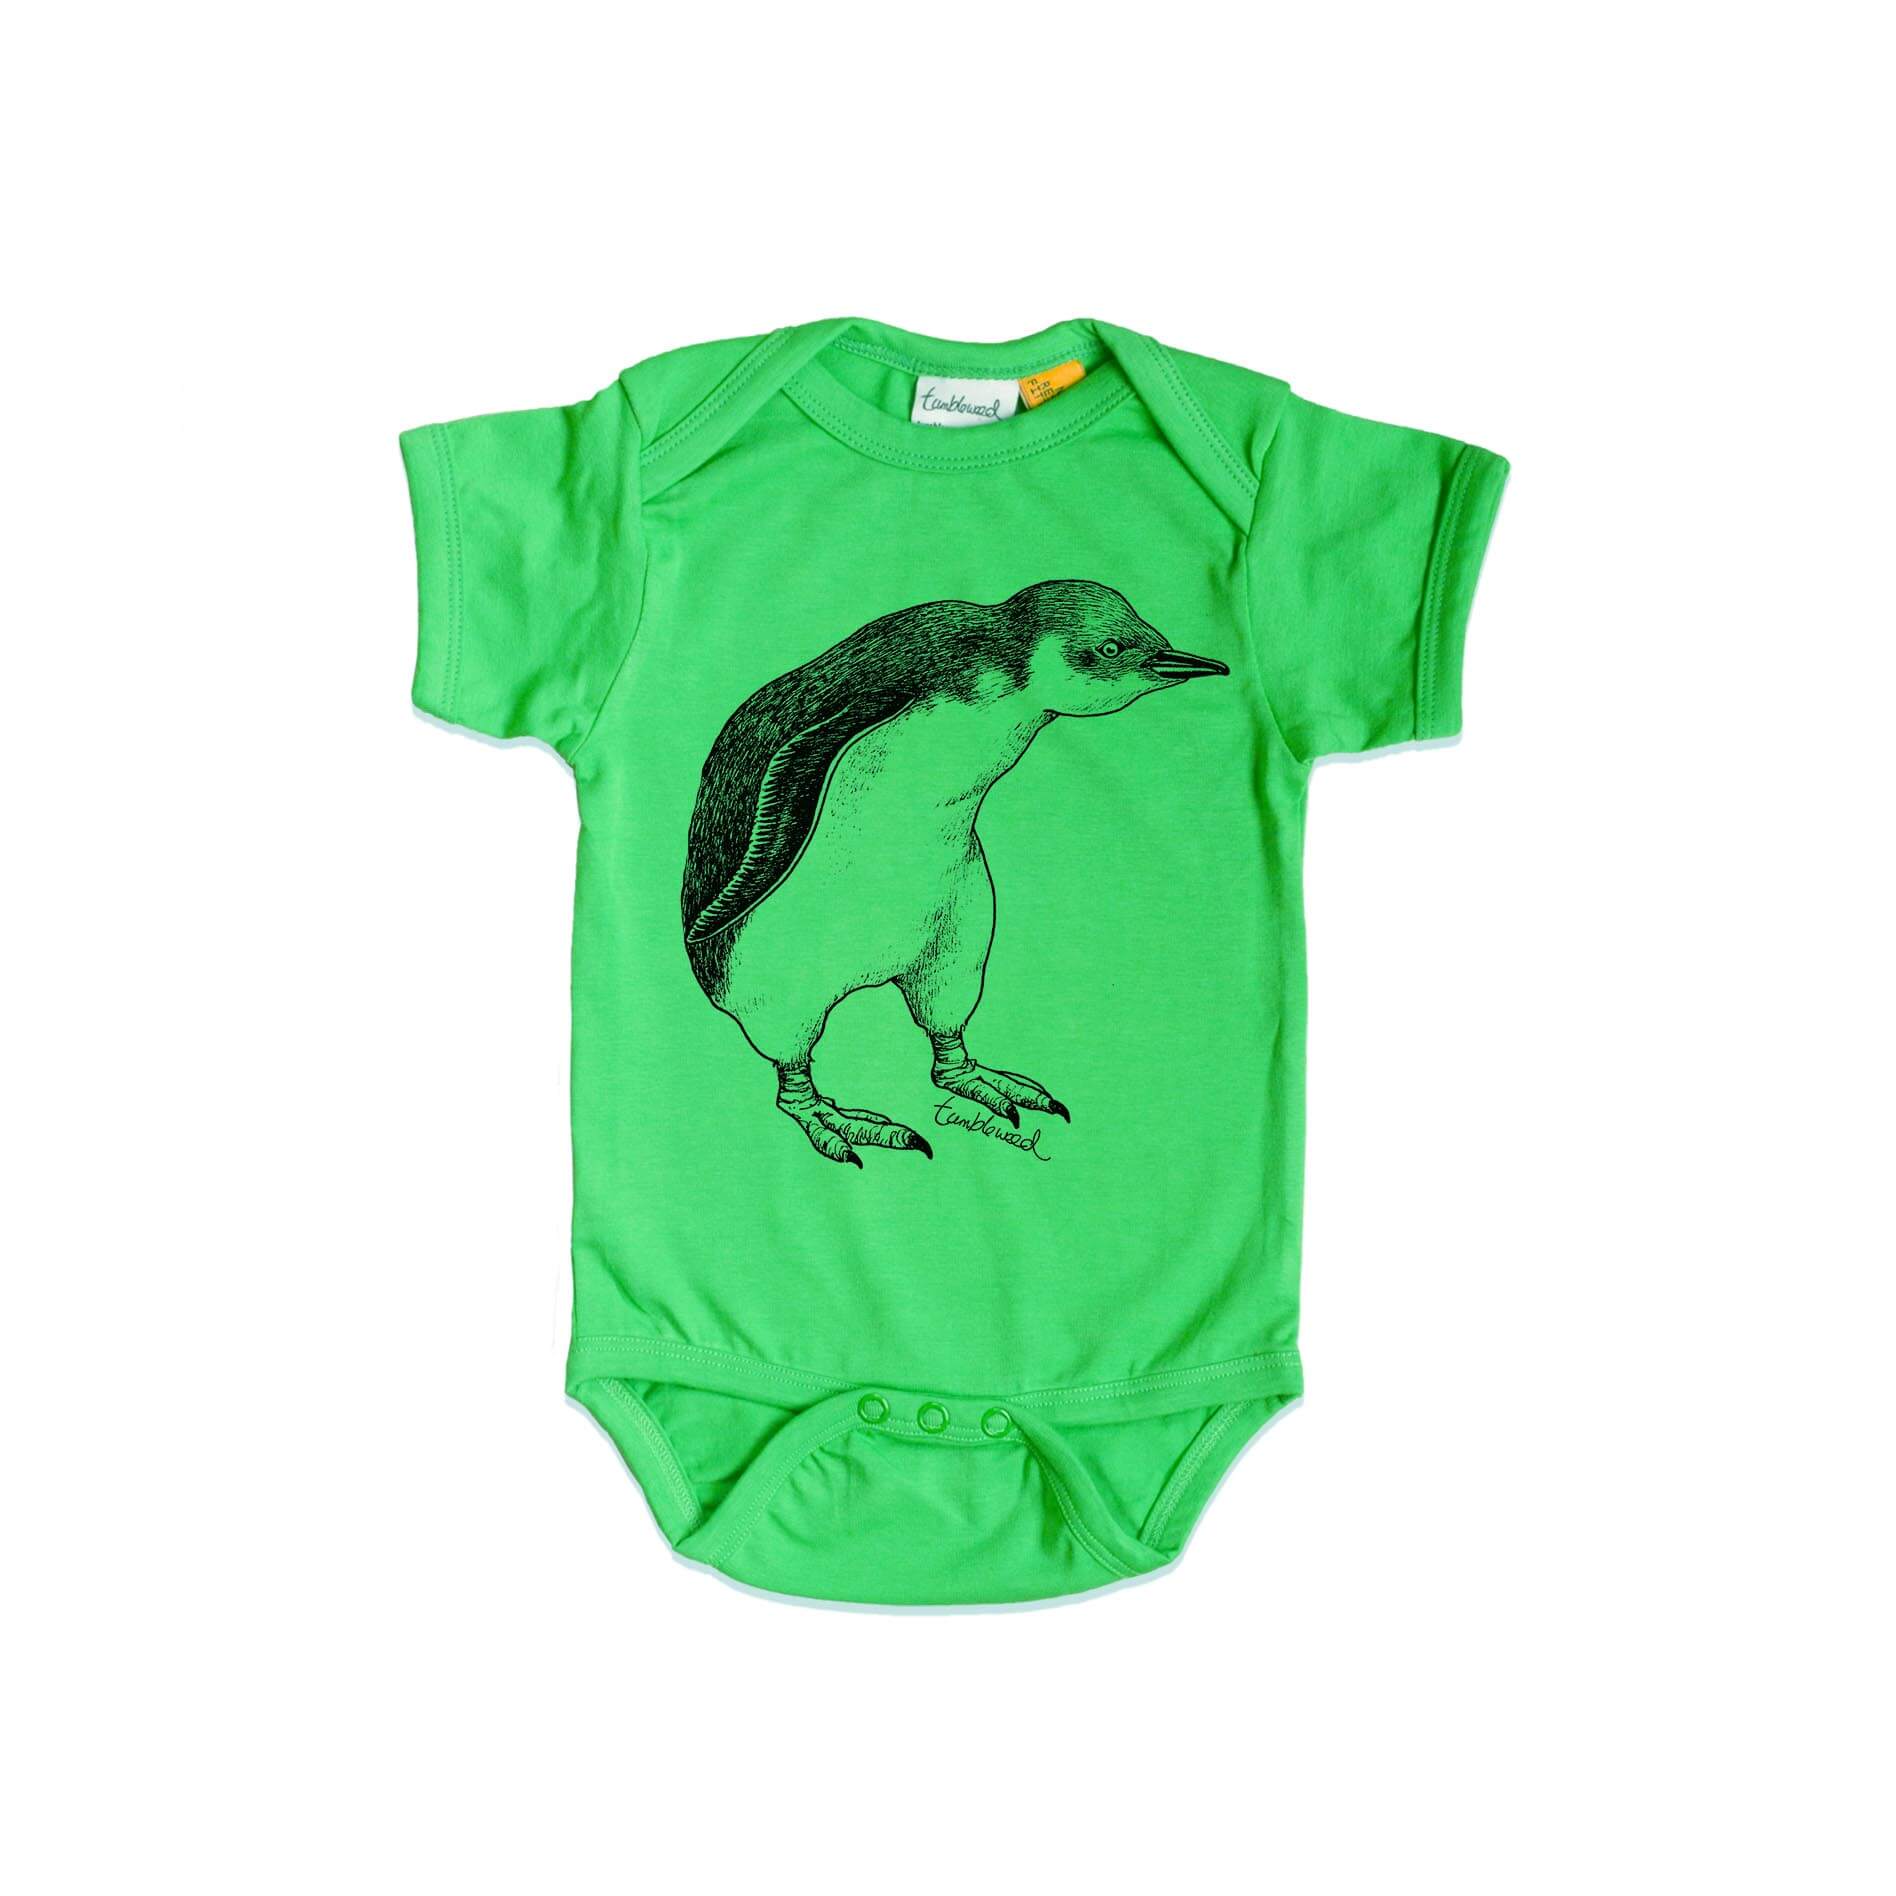 Short sleeved, green, organic cotton, baby onesie featuring a screen printed Little Blue Penguin design.
 design.